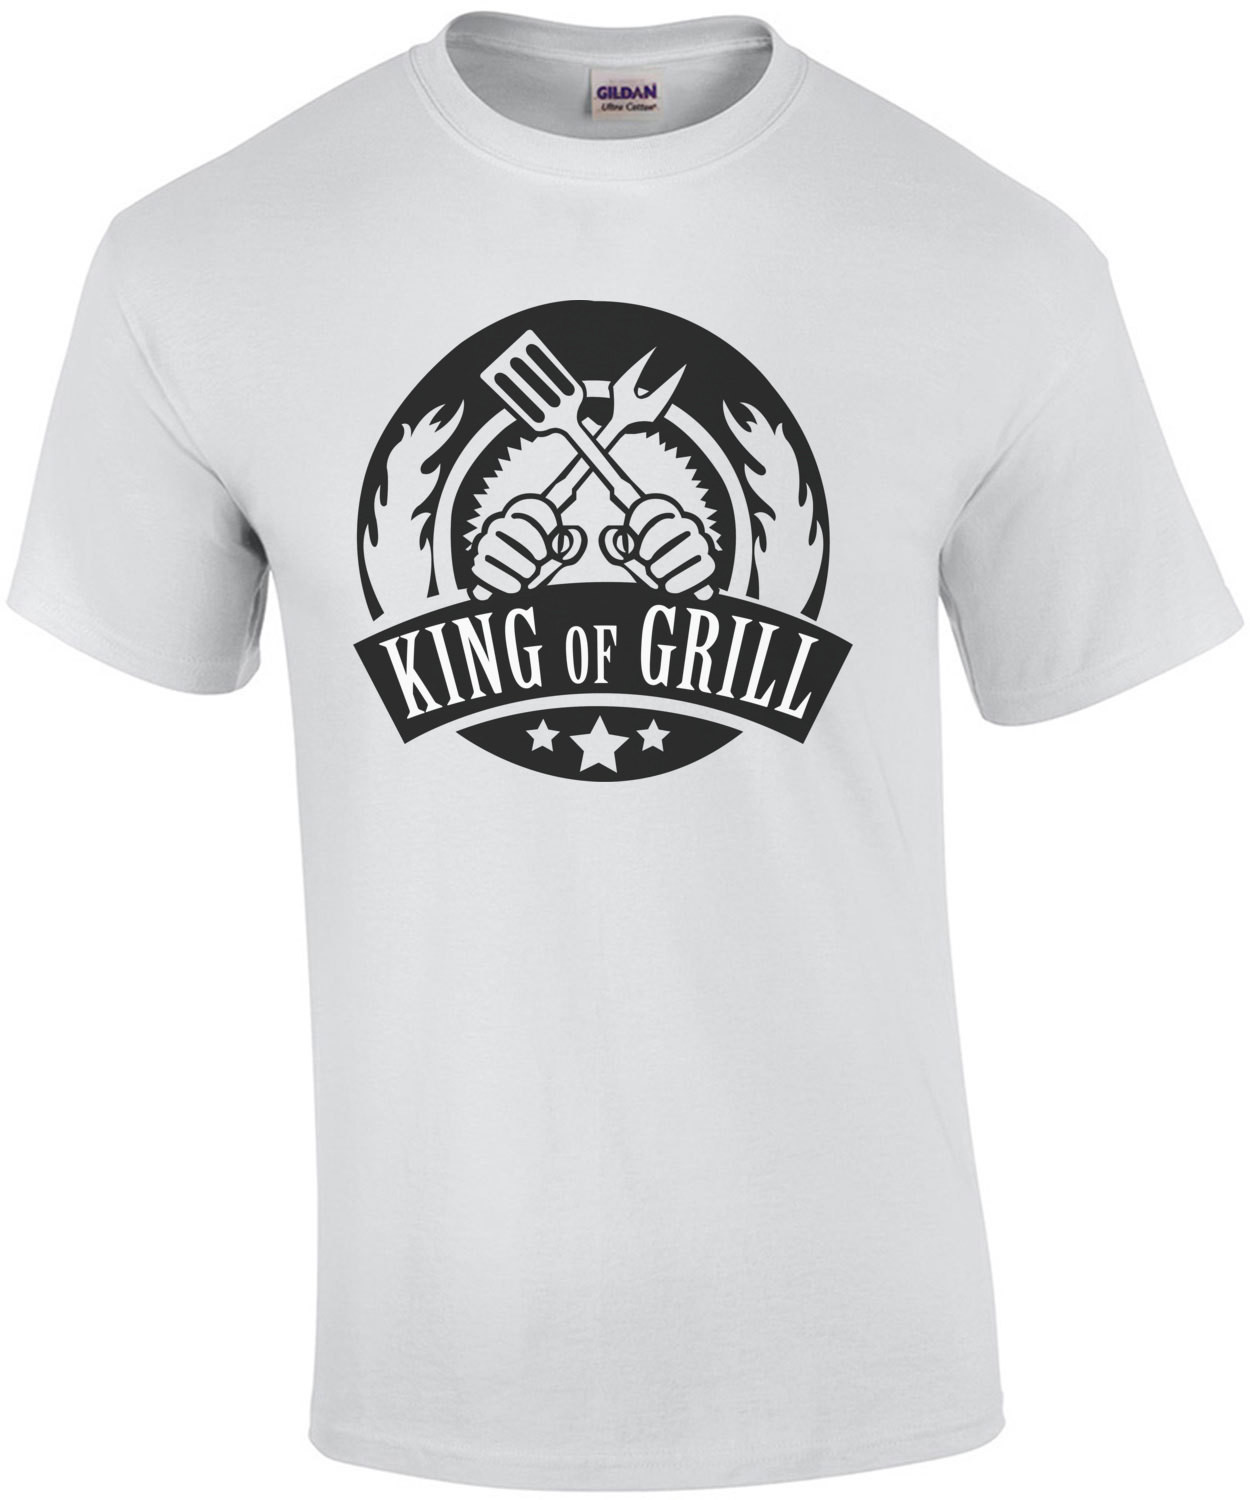 King of grill - bbq t-shirt